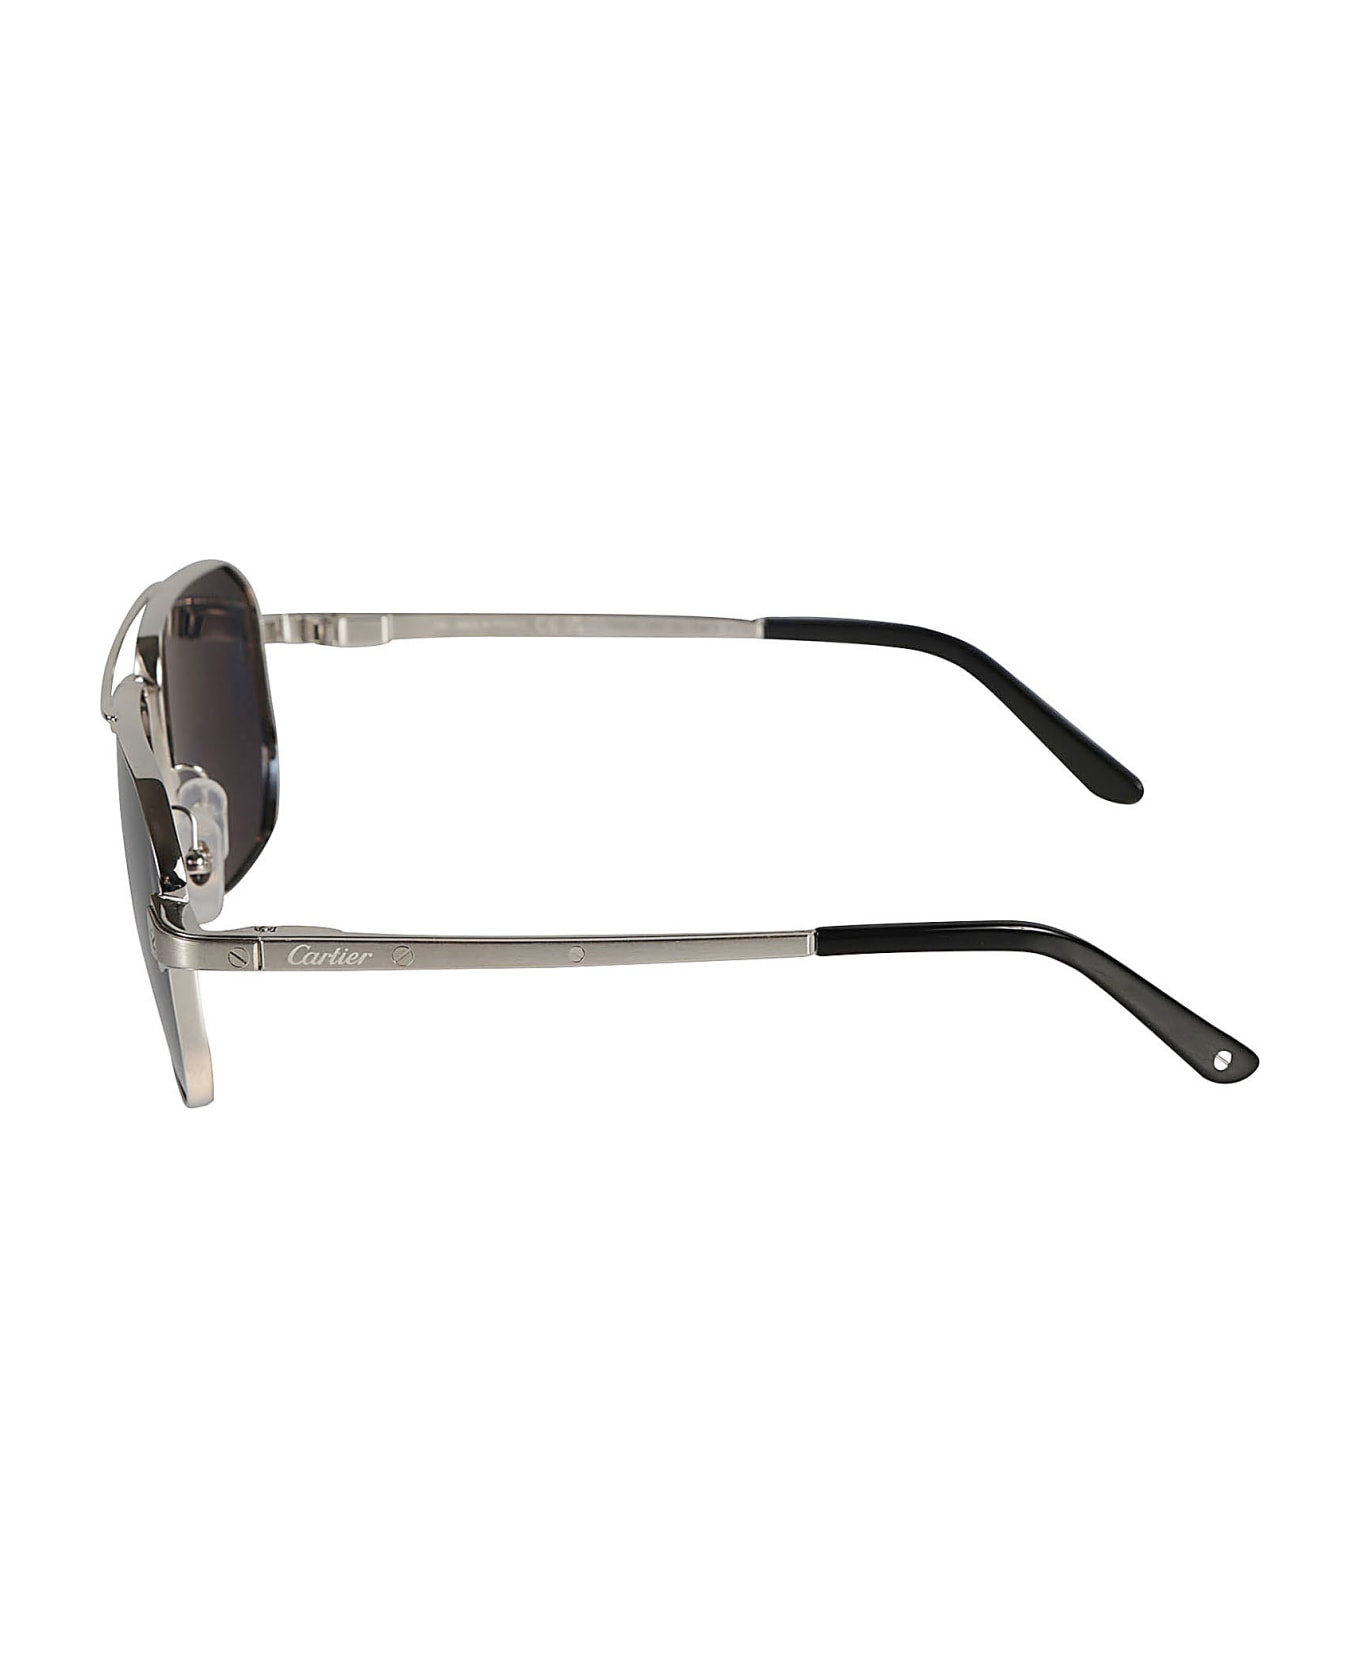 Cartier Eyewear Aviator Sunglasses - Silver/Blue